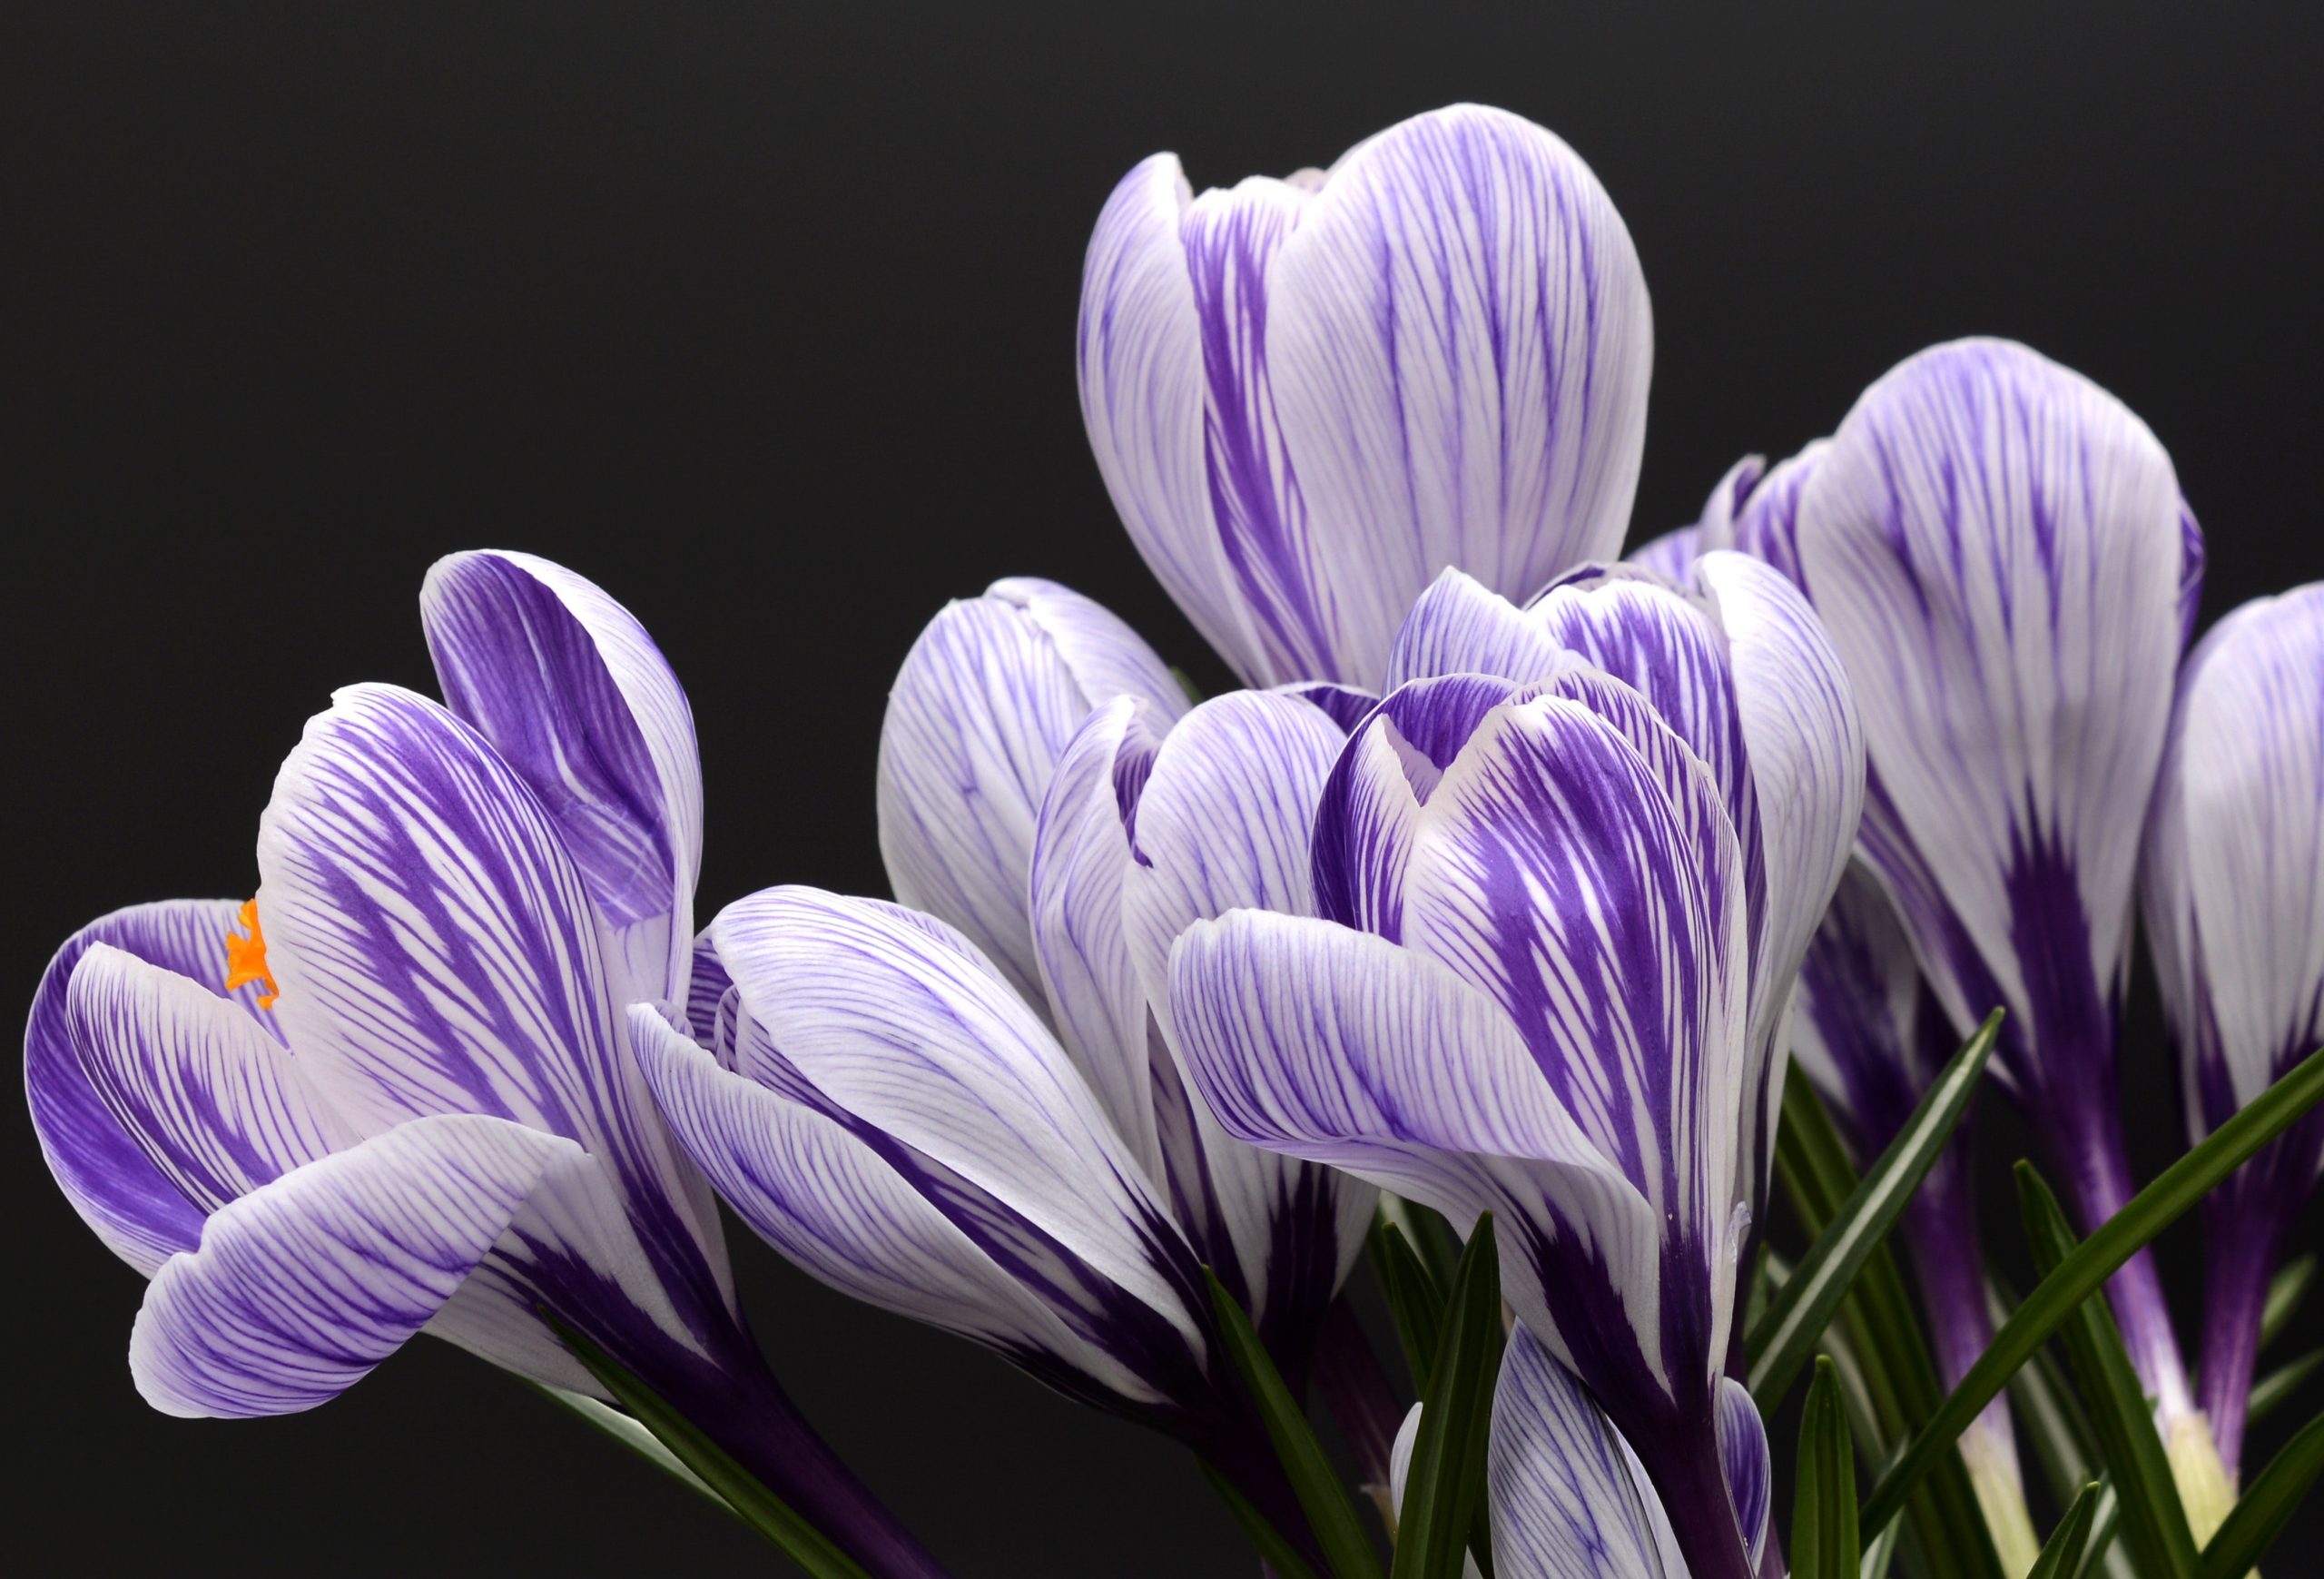 crocus blanc et violet formation